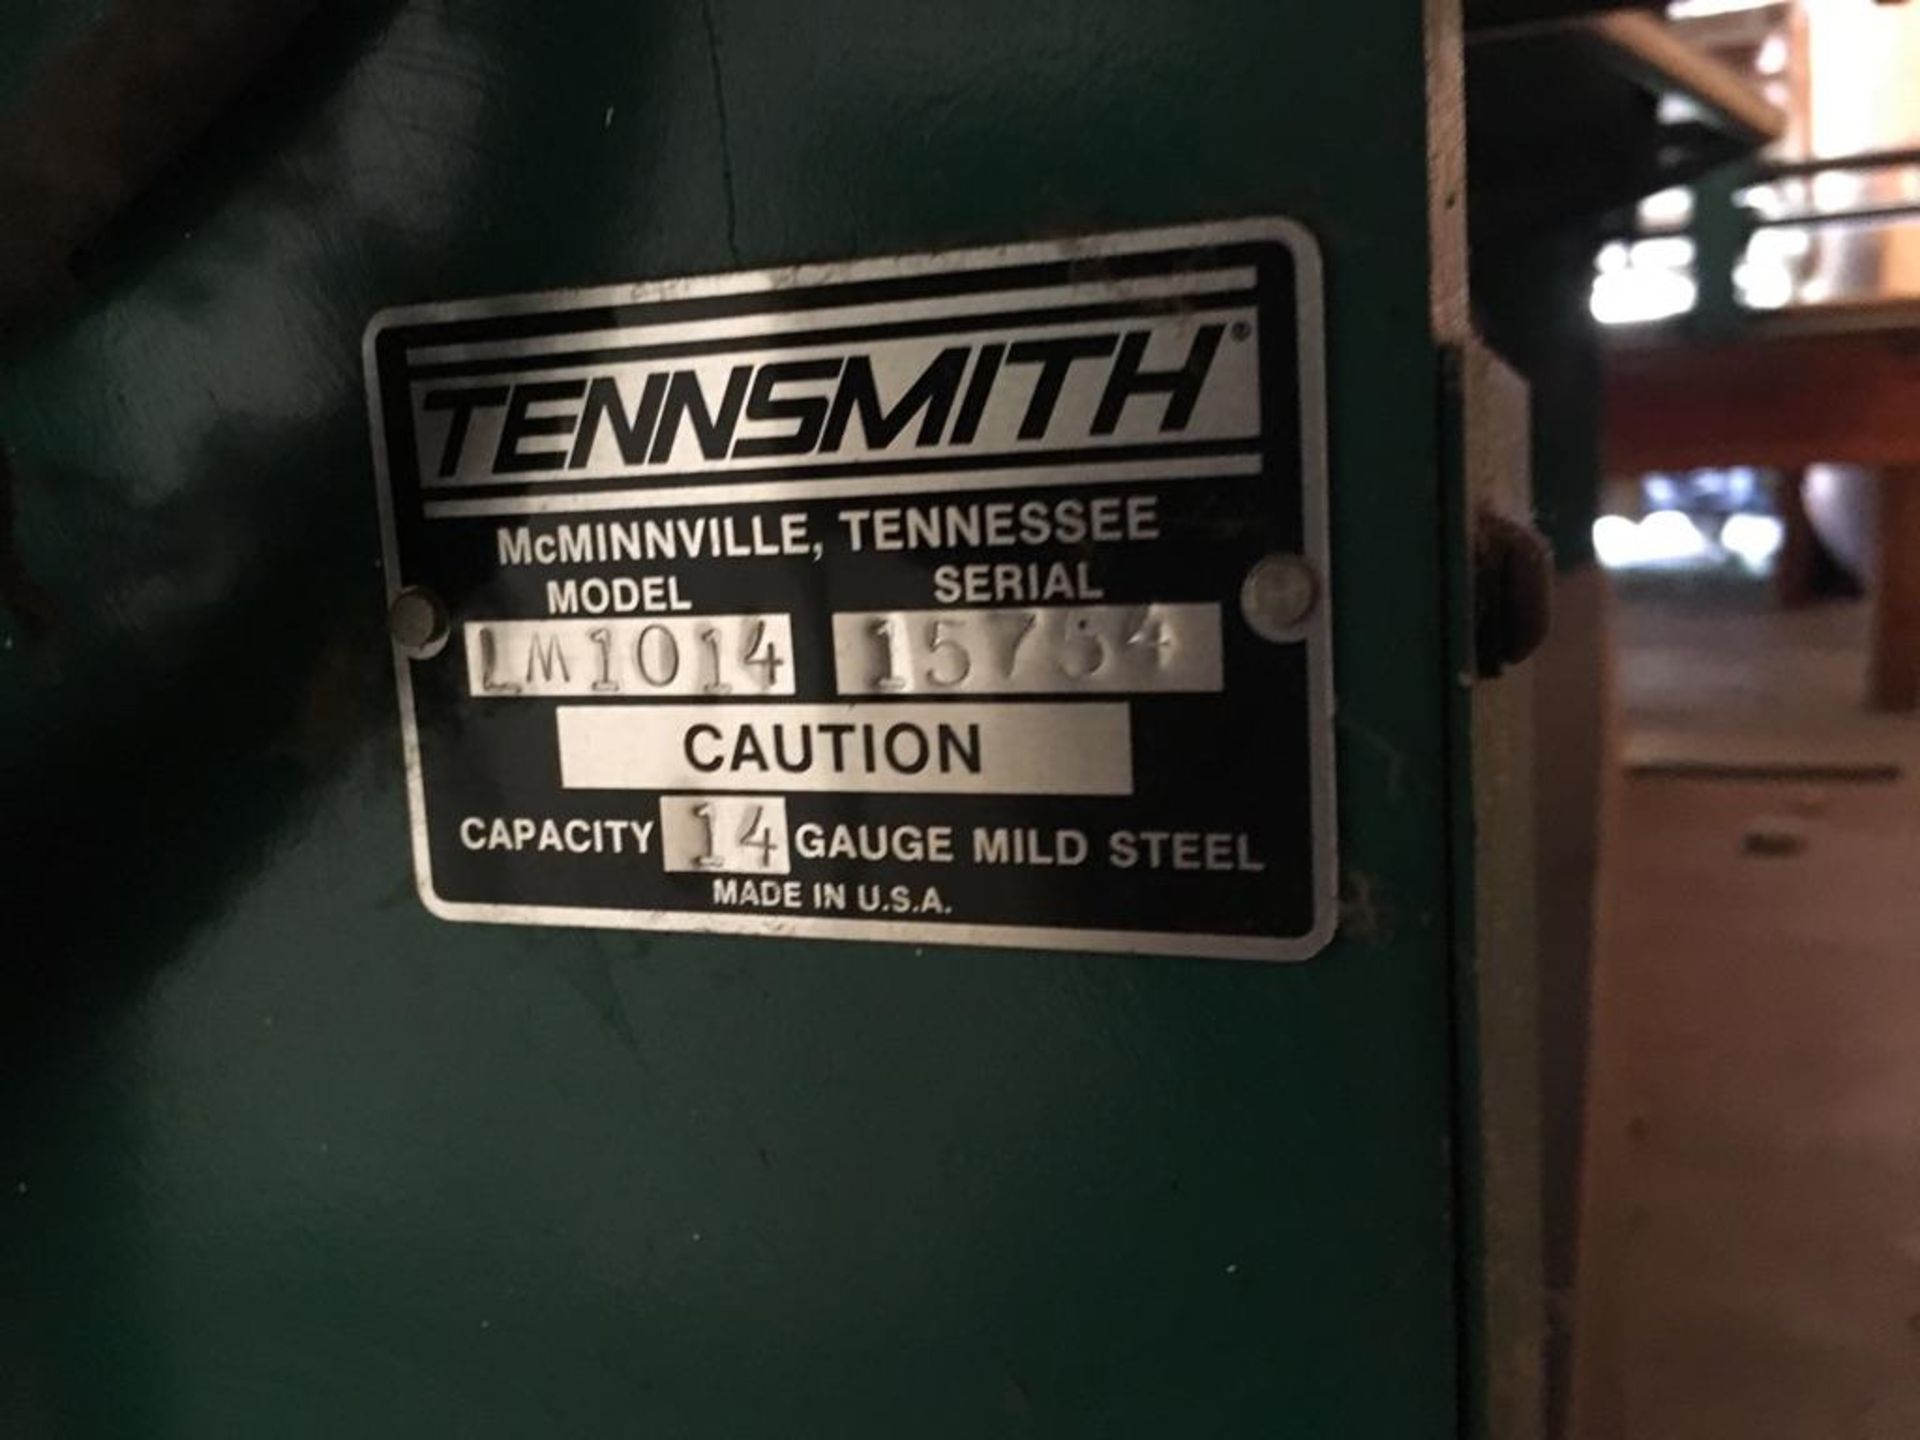 Tennsmith Model LM1014 14 Ga. Metal Sheer - Image 4 of 7